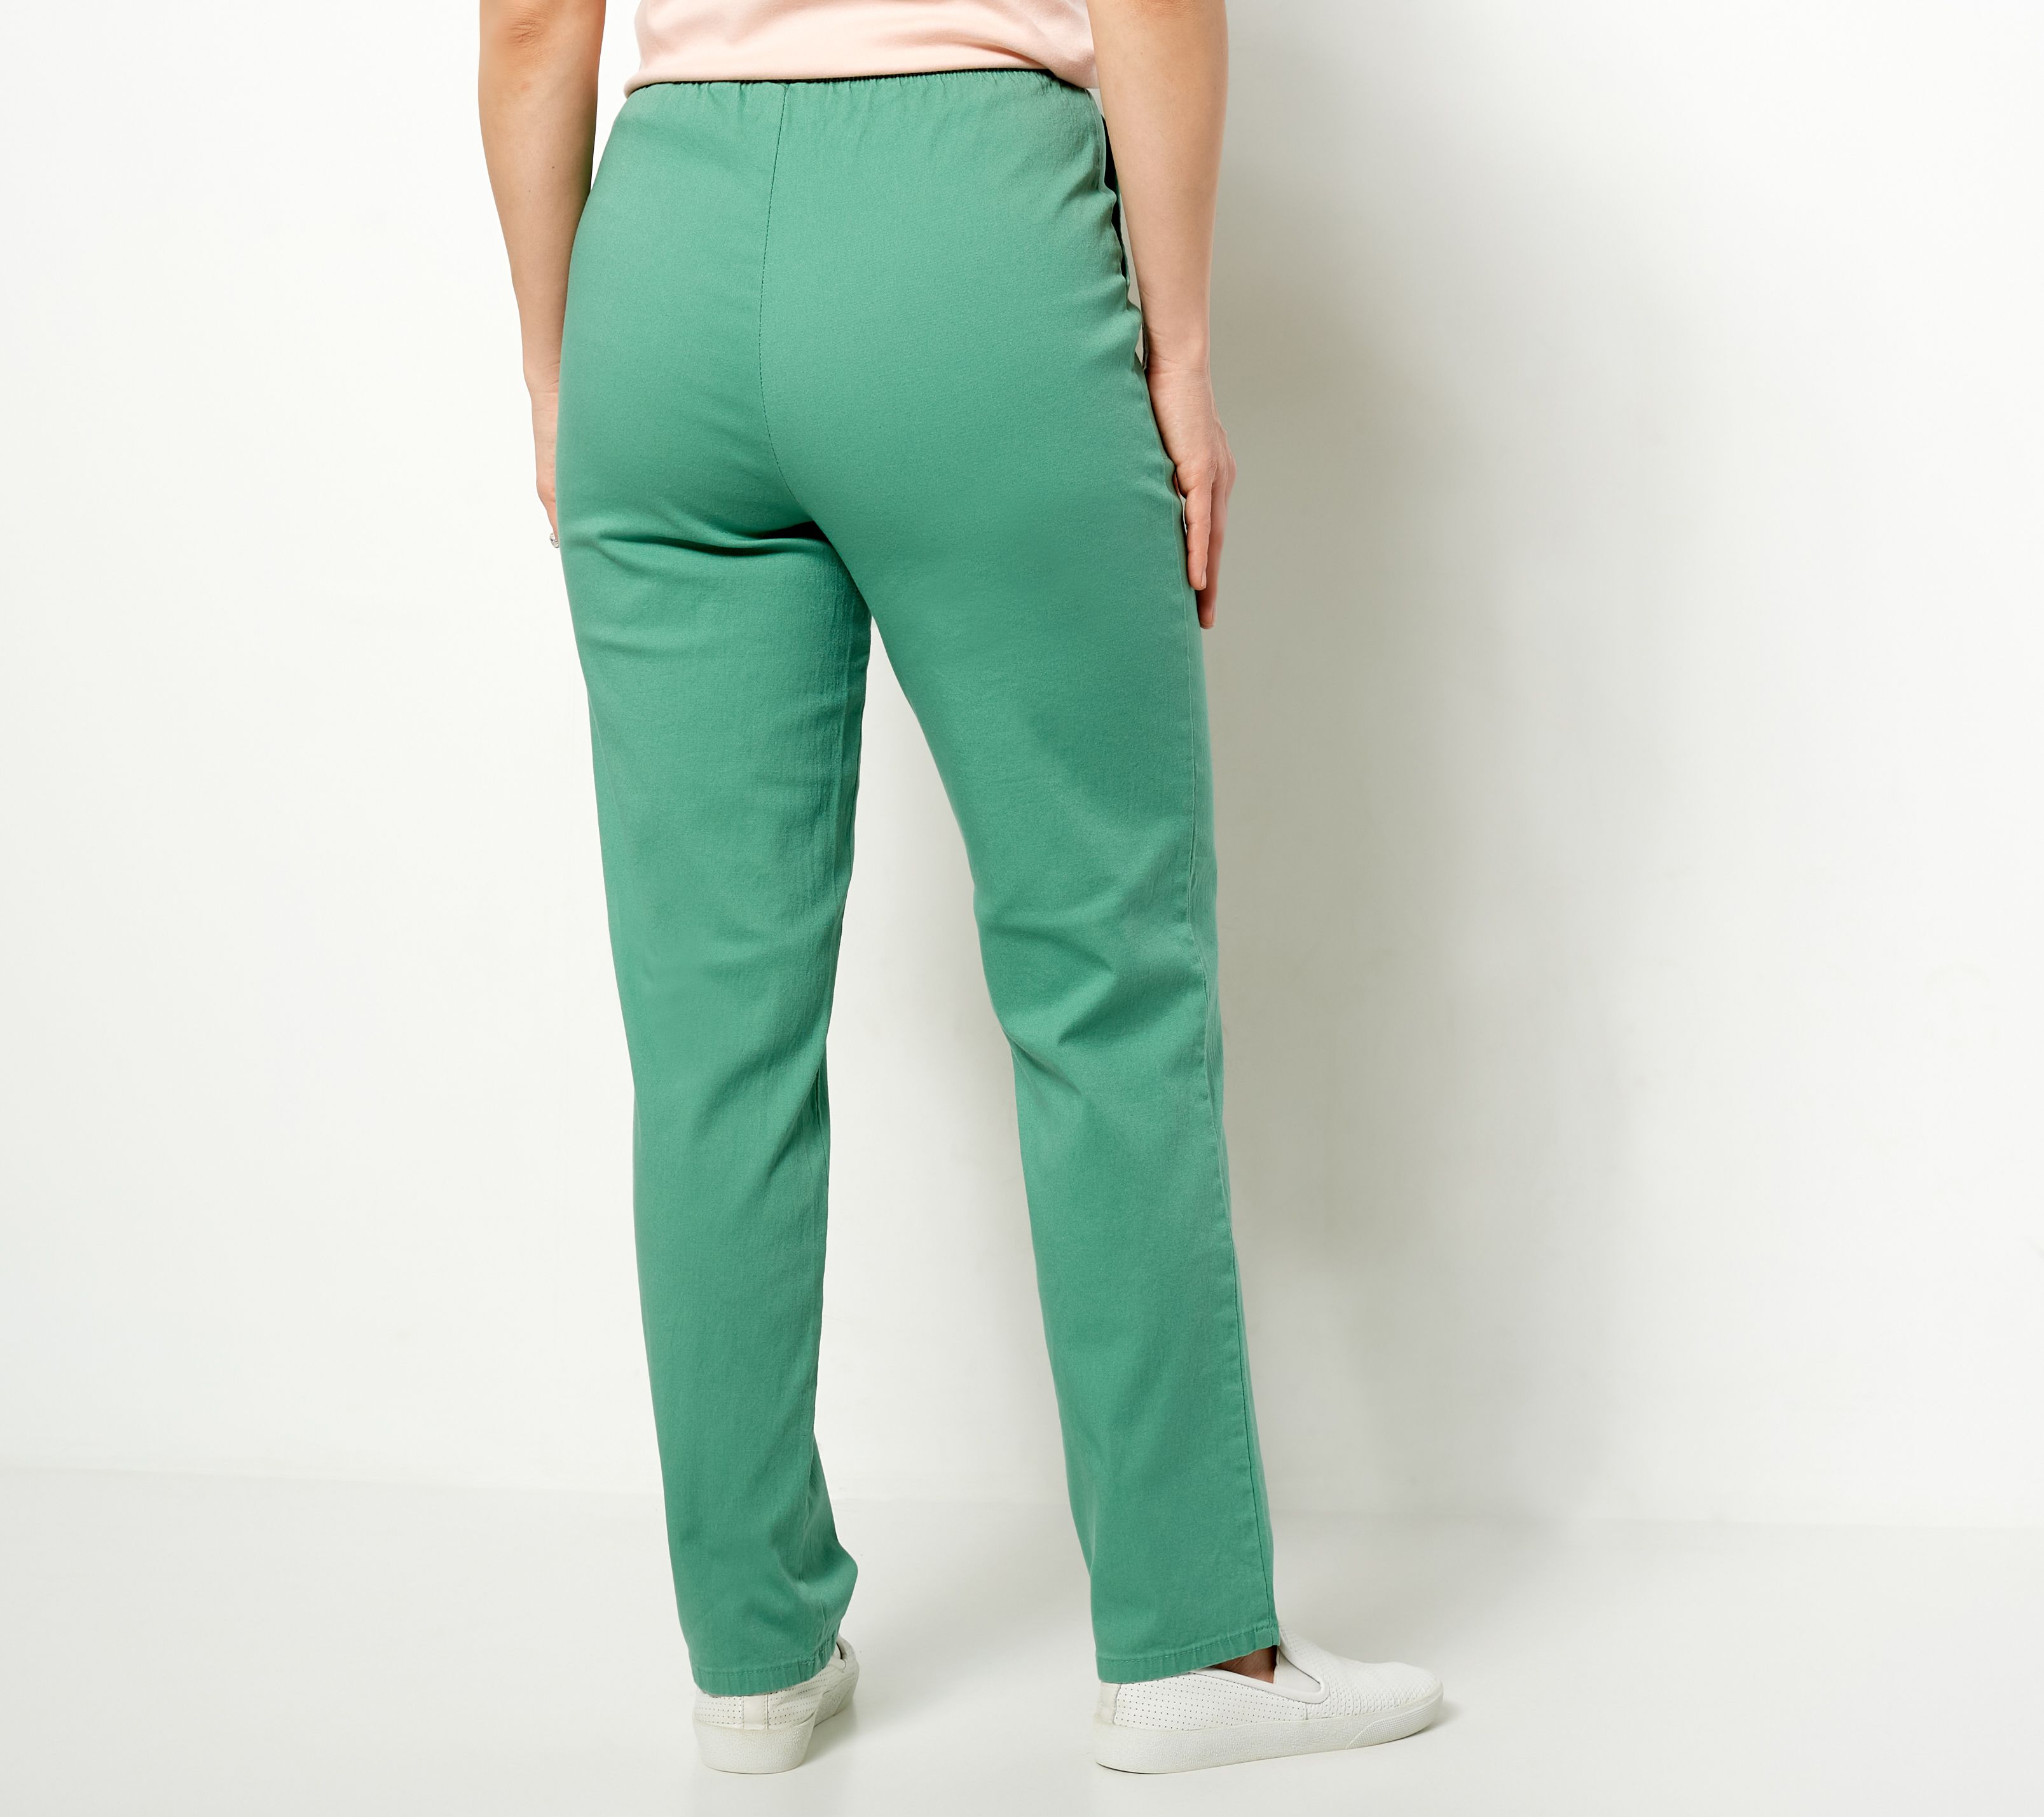 Denim & Co. Original Waist Stretch Tall Side Pocket Pants - QVC.com